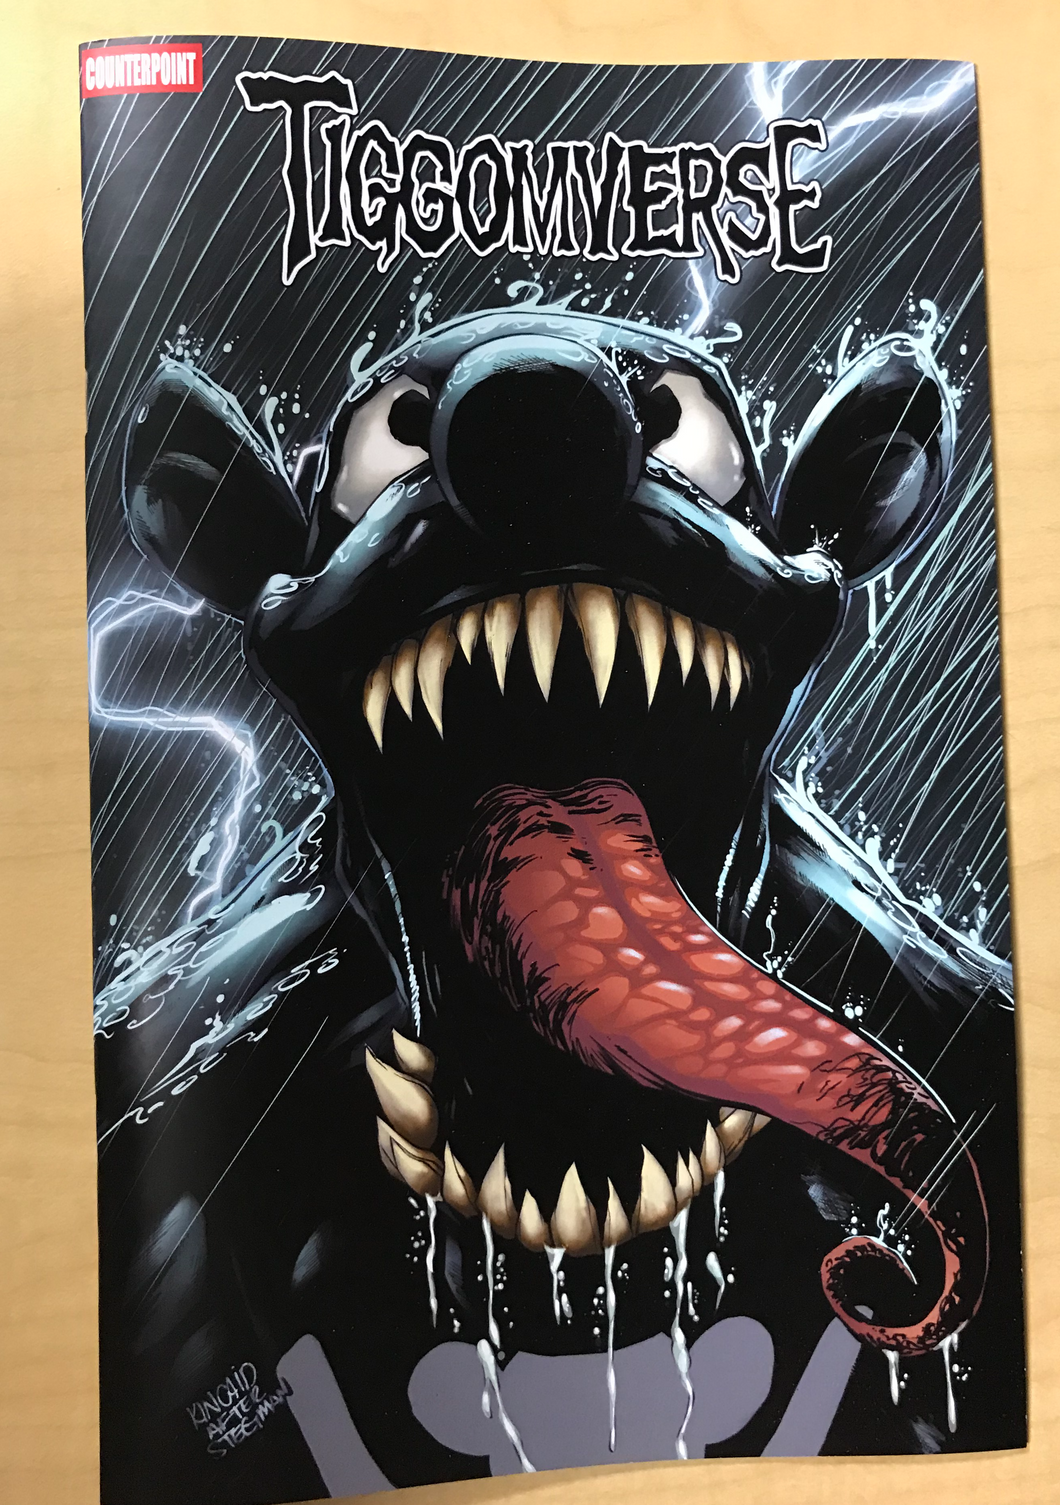 TIGGOMVERSE #1 Venom #27 Ryan Stegman Homage DRESS Variant Cover by Ryan Kincaid